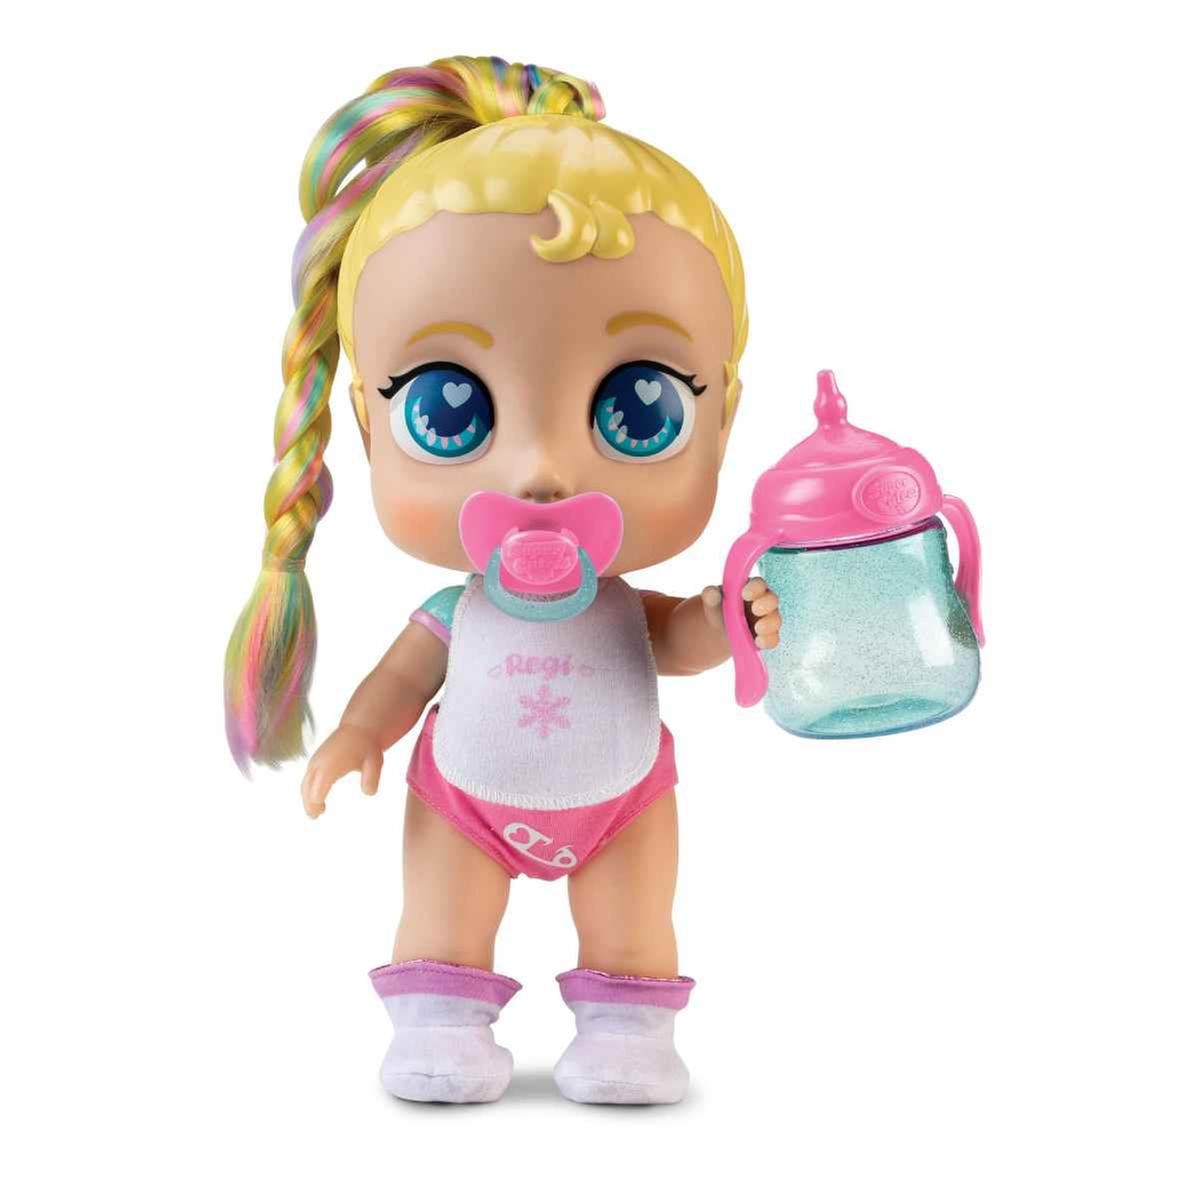 Super Cute Little Babies - Regi, Bonecas TV